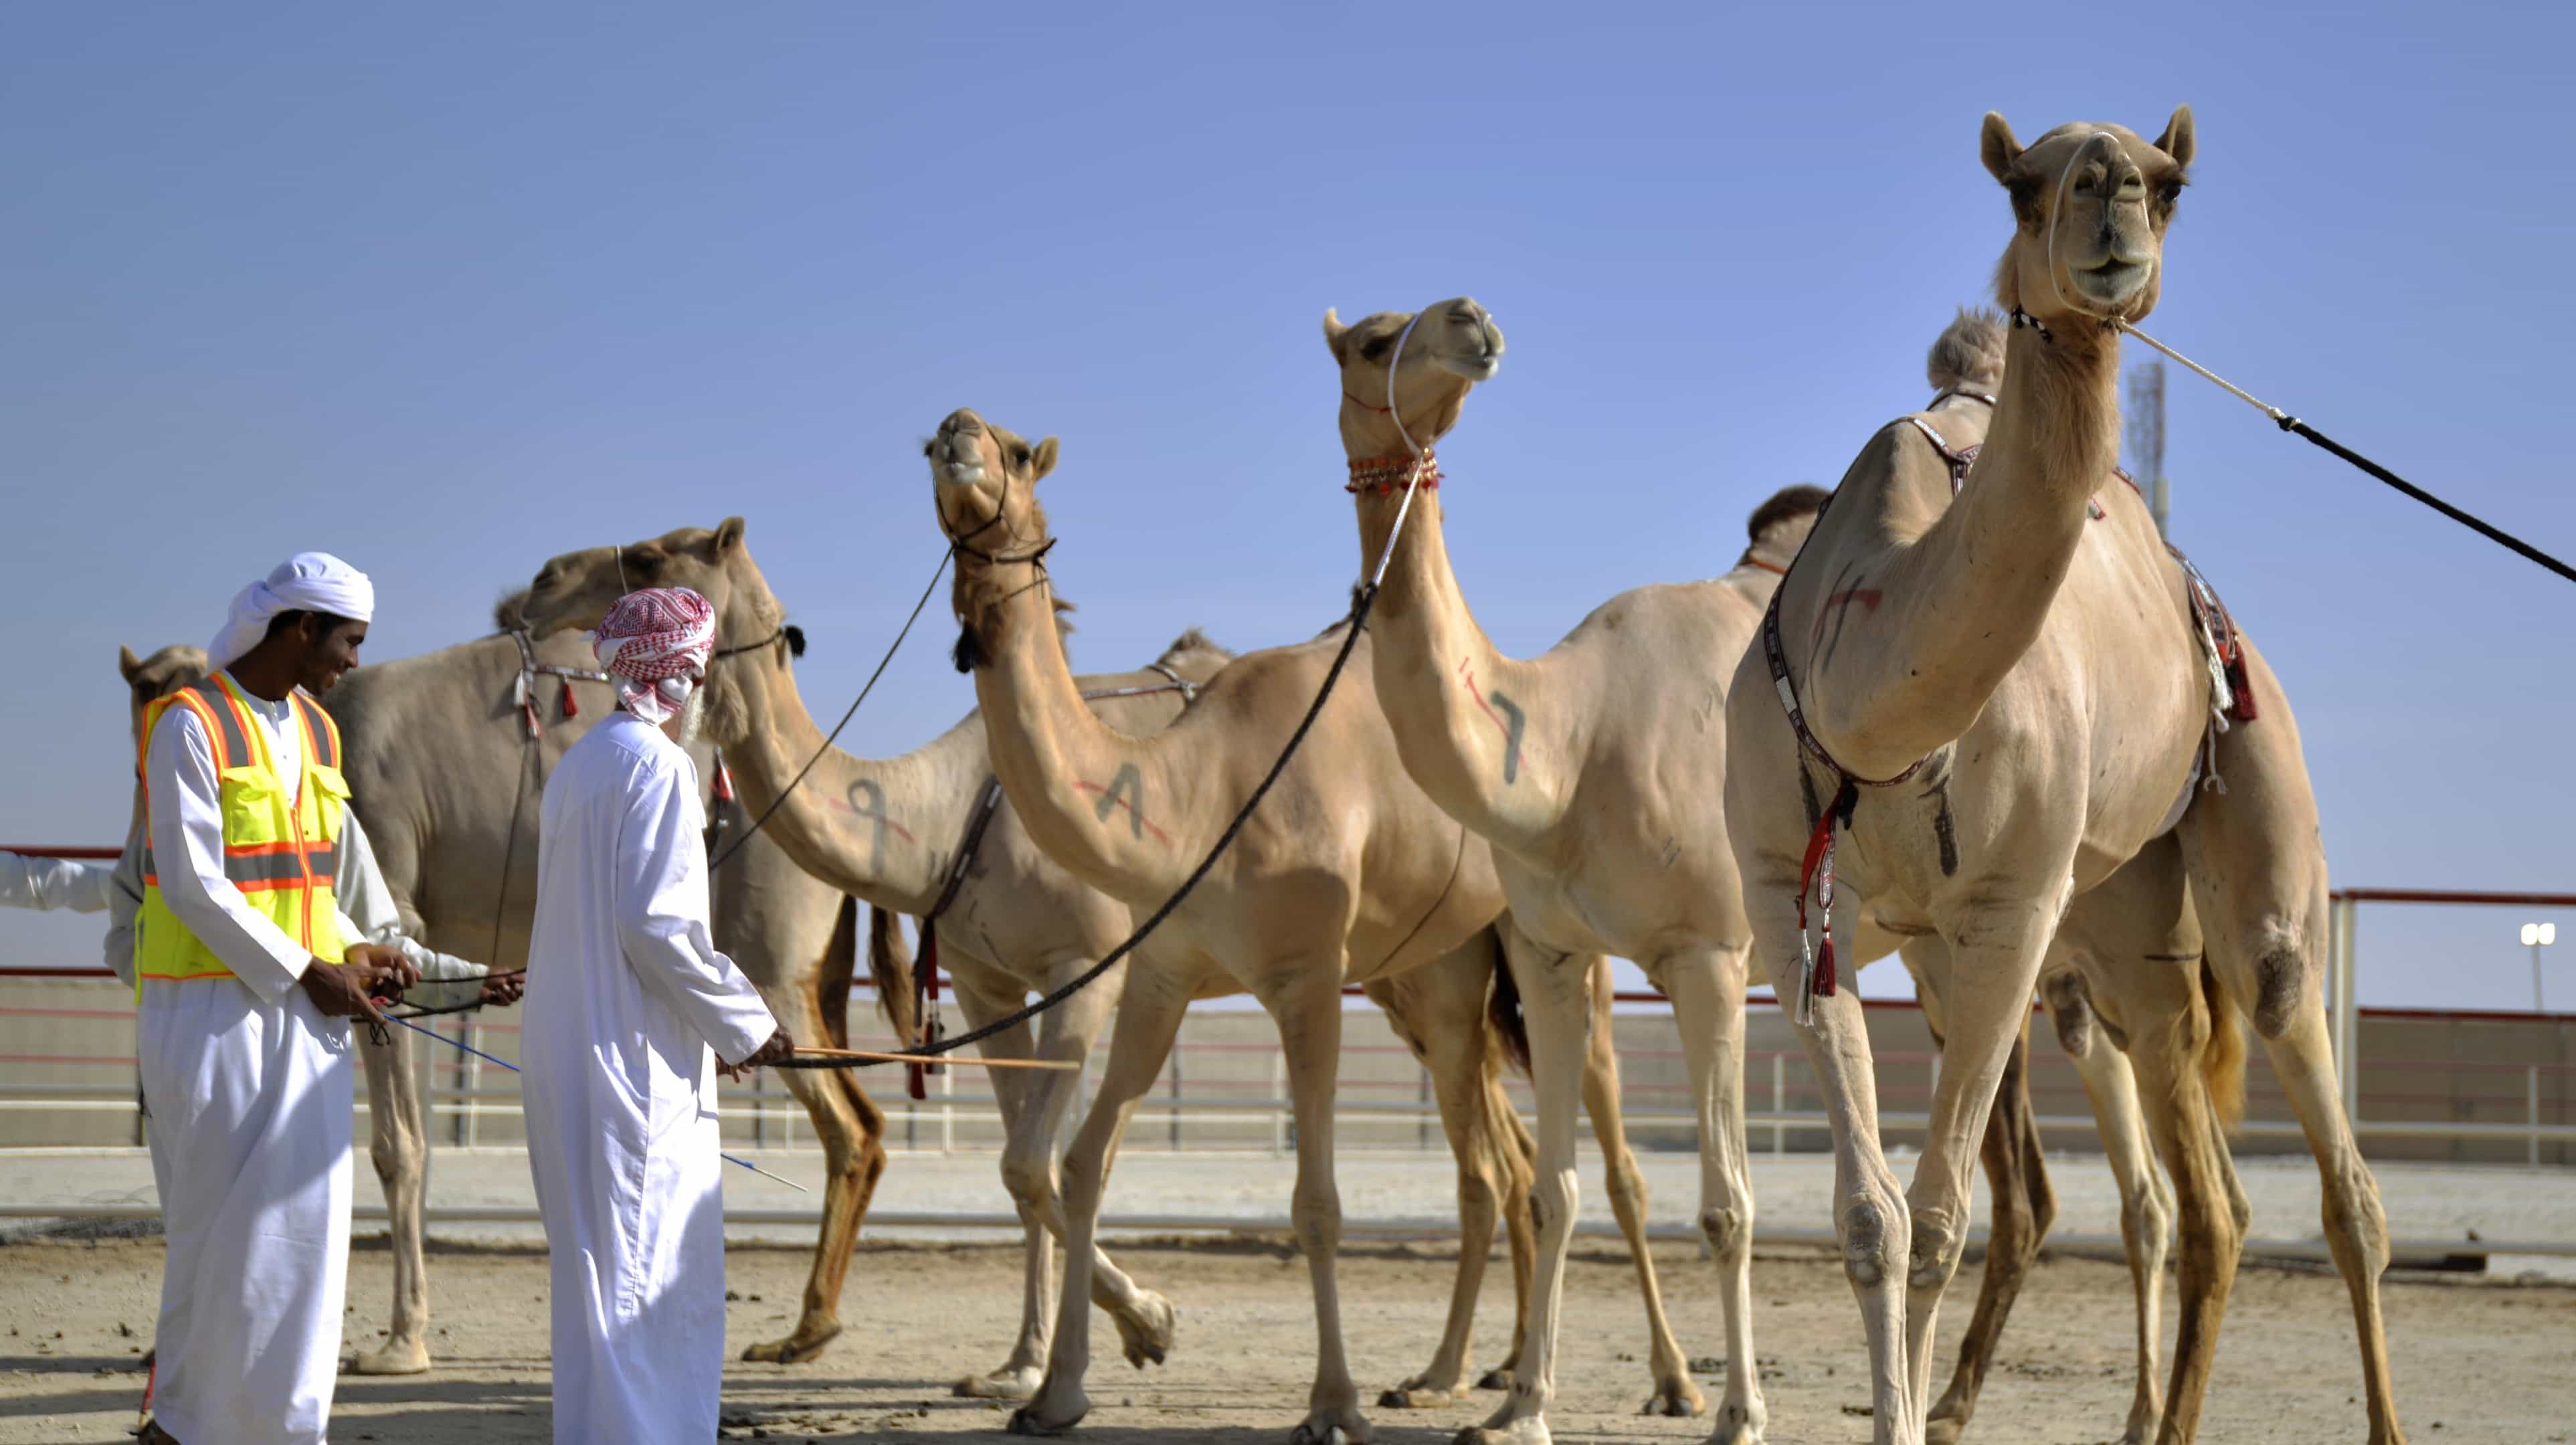 Two Emirati men handling five camels at Al Wathba